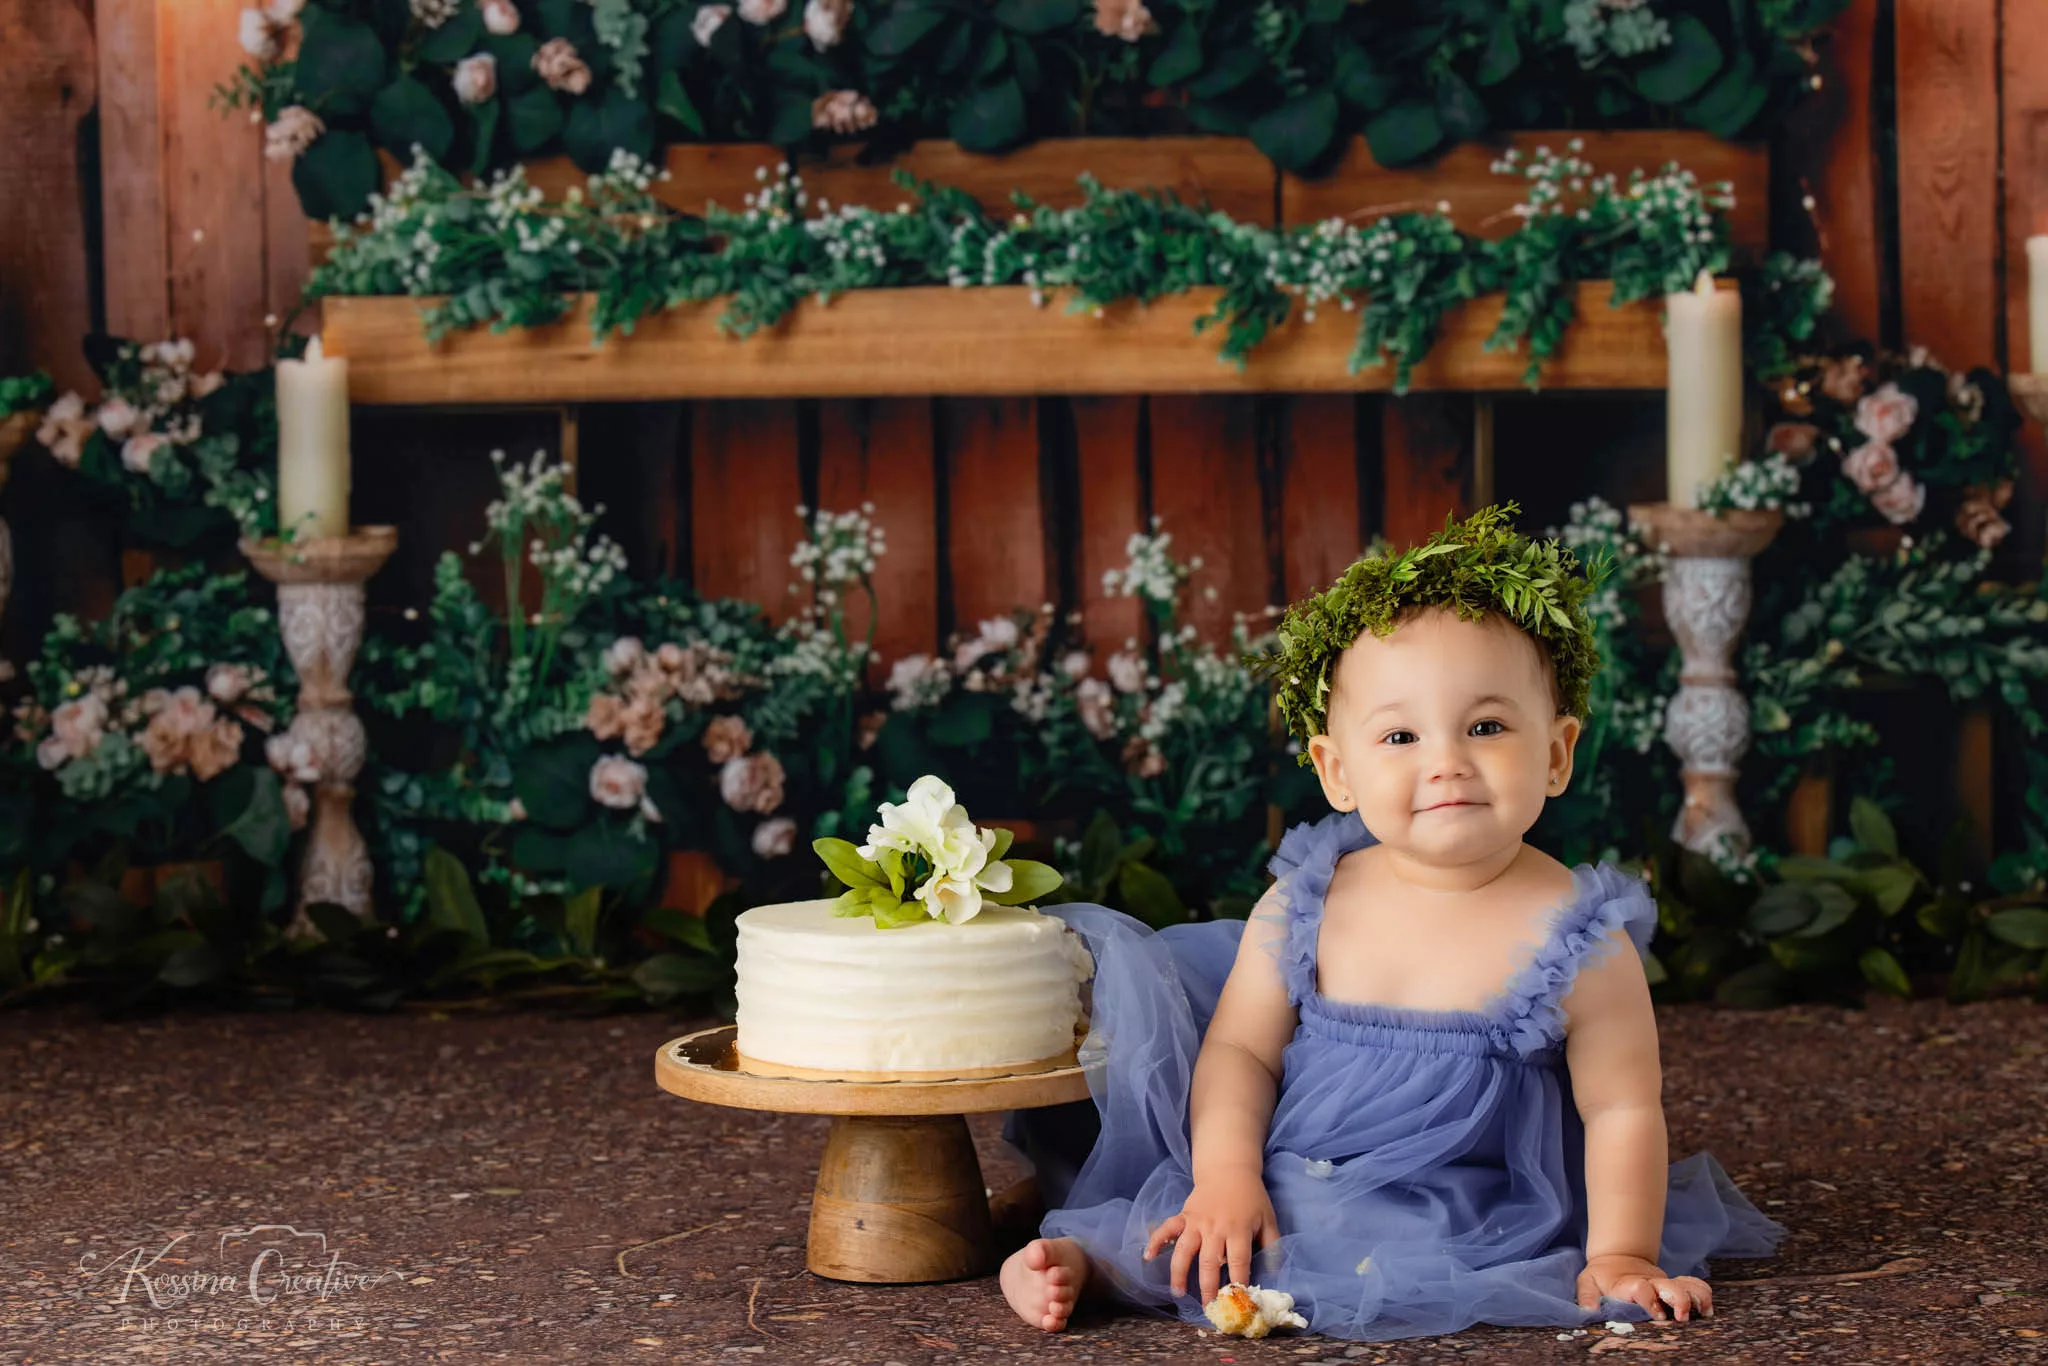 Orlando Girl Cake Smash 1st Birthday Photographer Photo Studio garden with candles back drop simple cake dirt floor